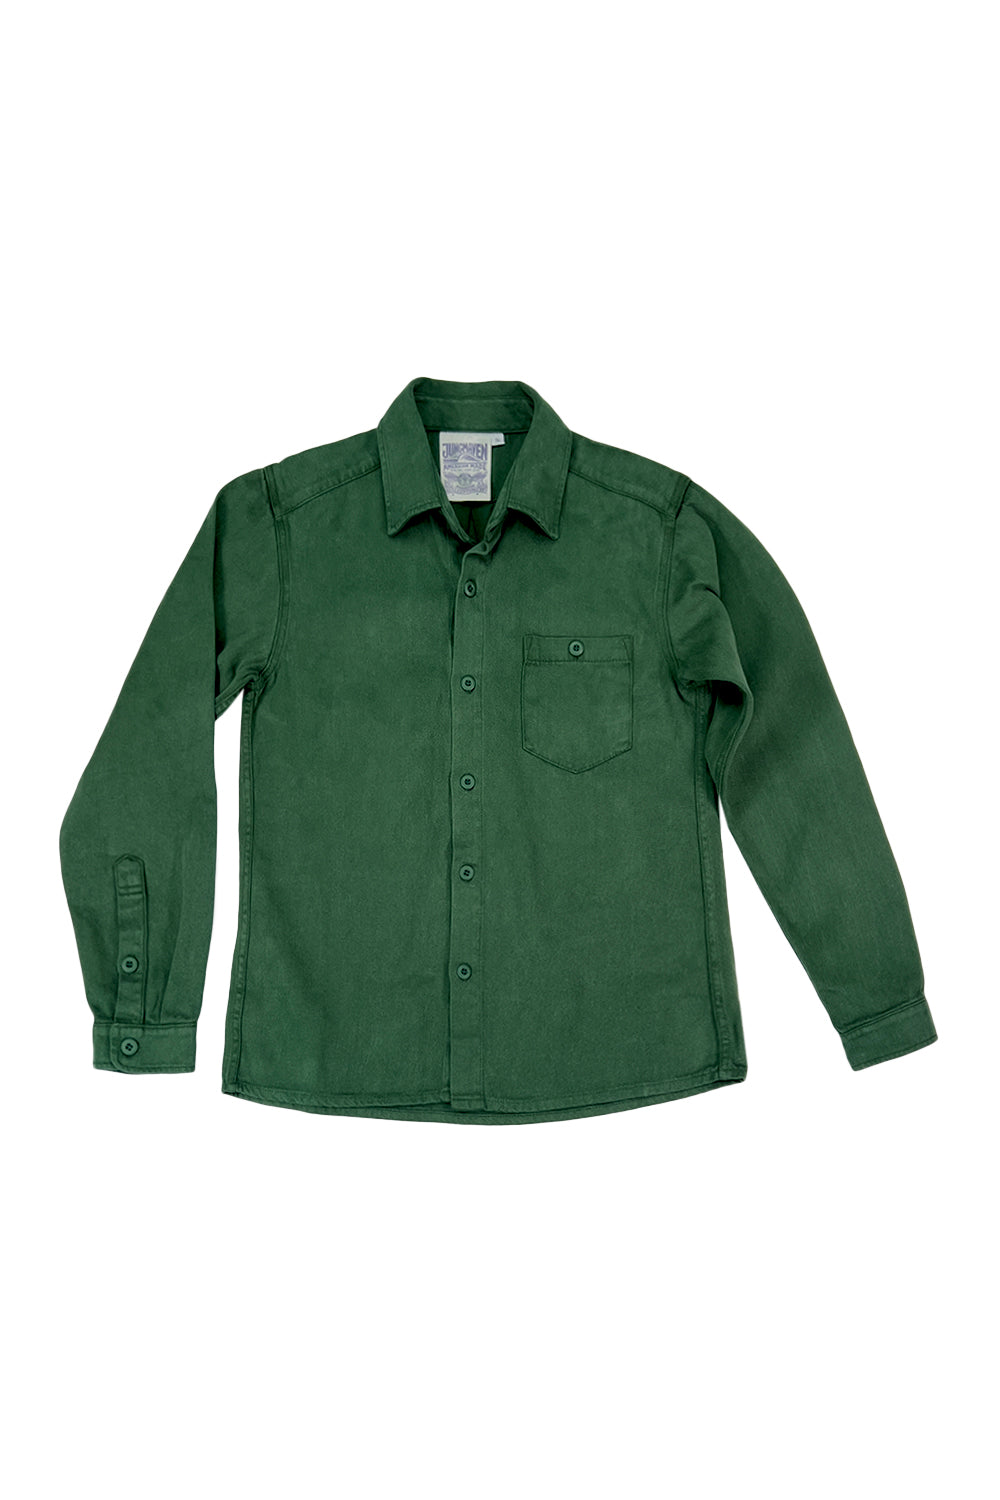 Topanga Shirt | Jungmaven Hemp Clothing & Accessories / Color: Hunter Green